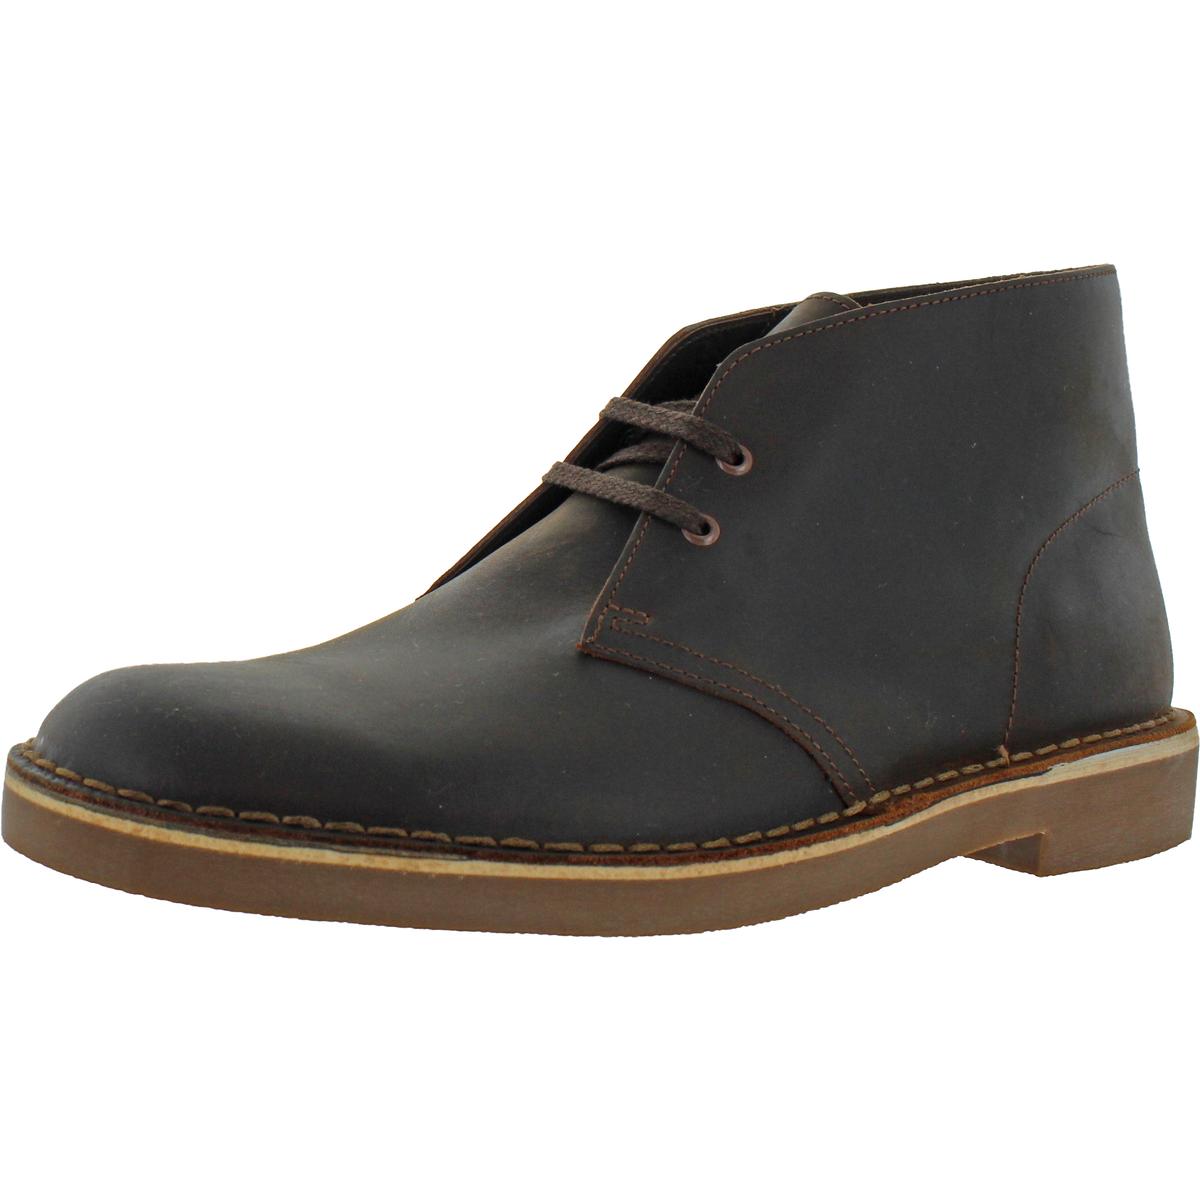 Parpadeo Nadie Excluir Clarks Men's Bushacre 2 Chukka Boots Size 8.5 Dark Brown Leather 26034135  for sale online | eBay